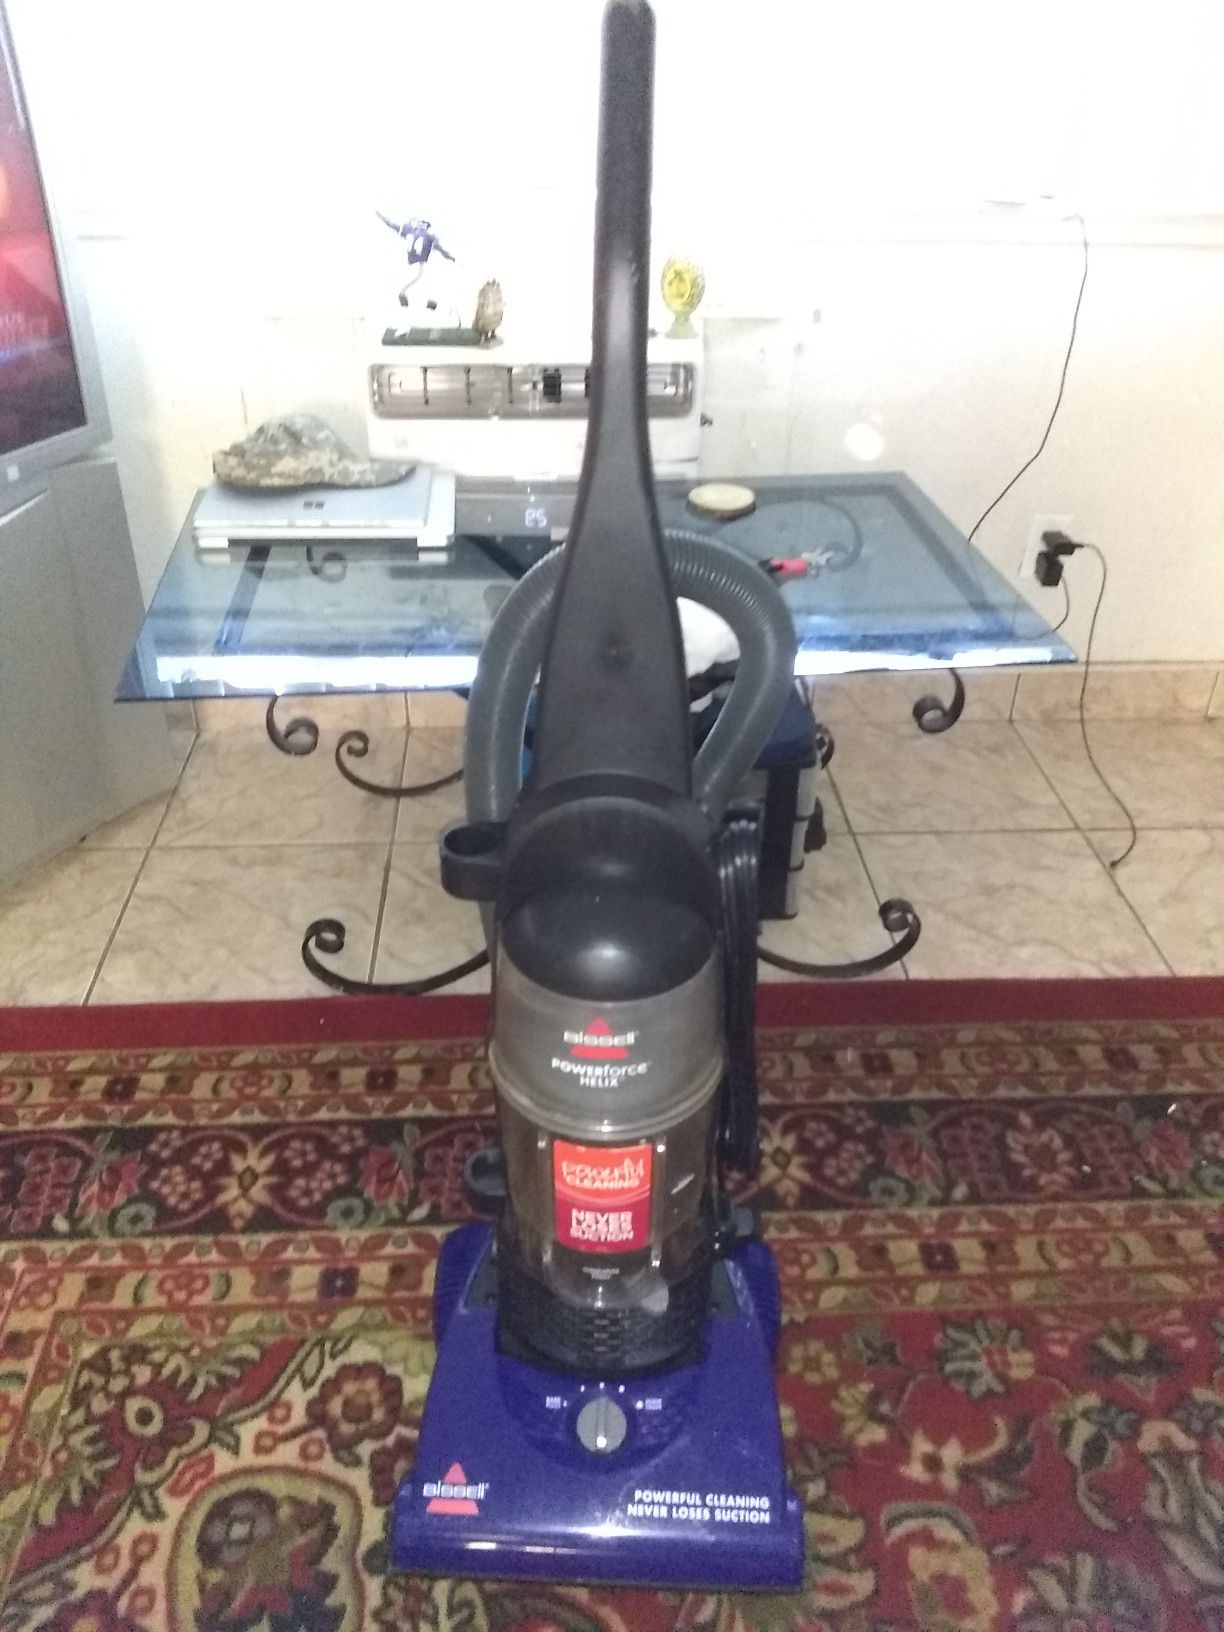 Bissell vacuum cleaner